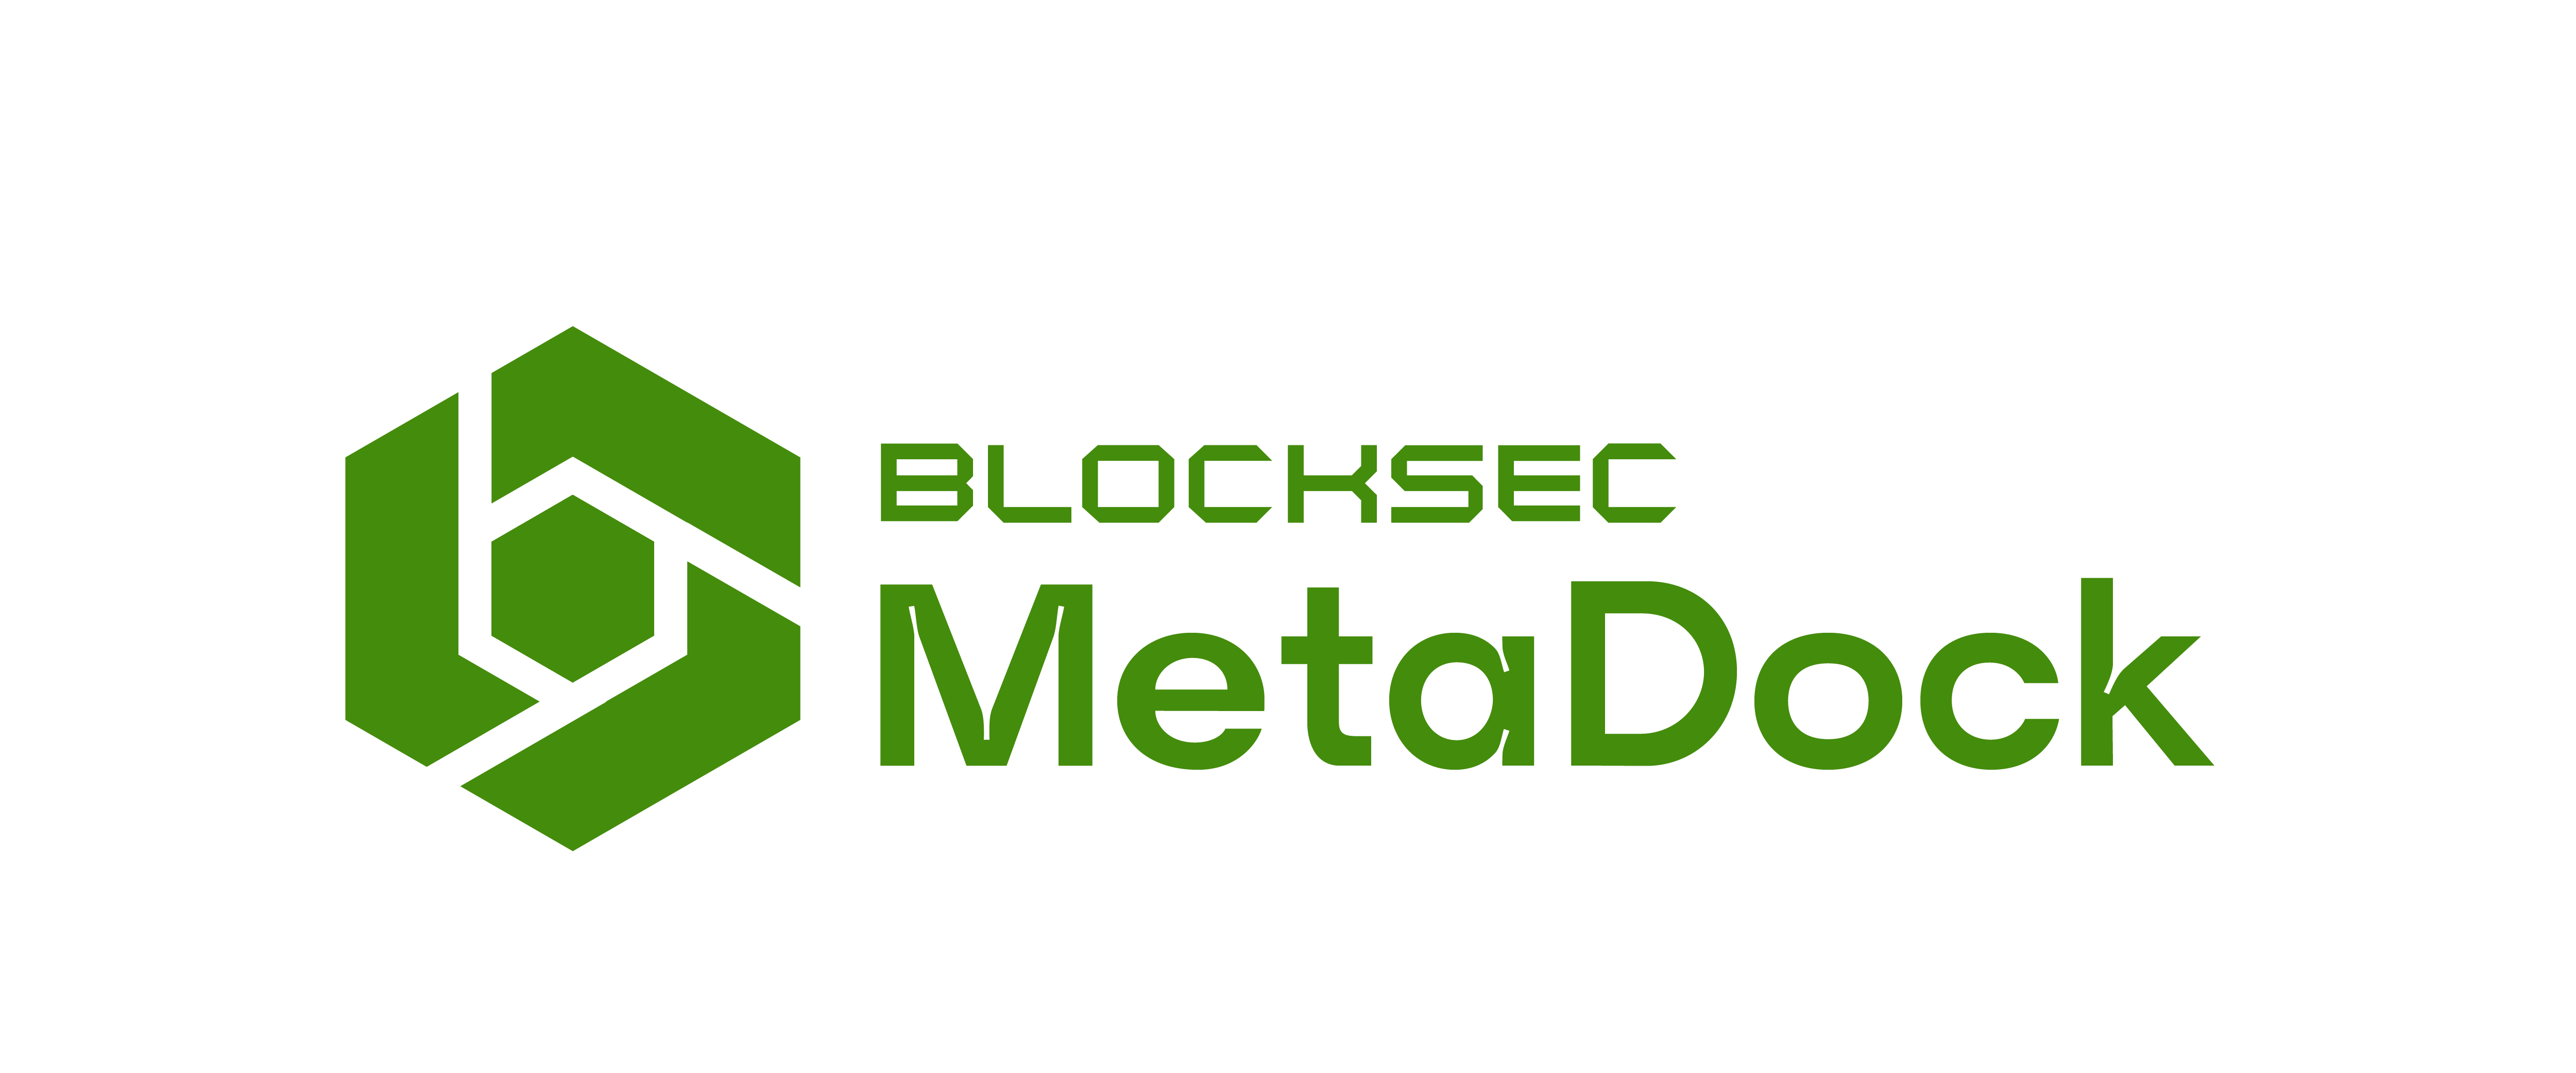 metadock logo